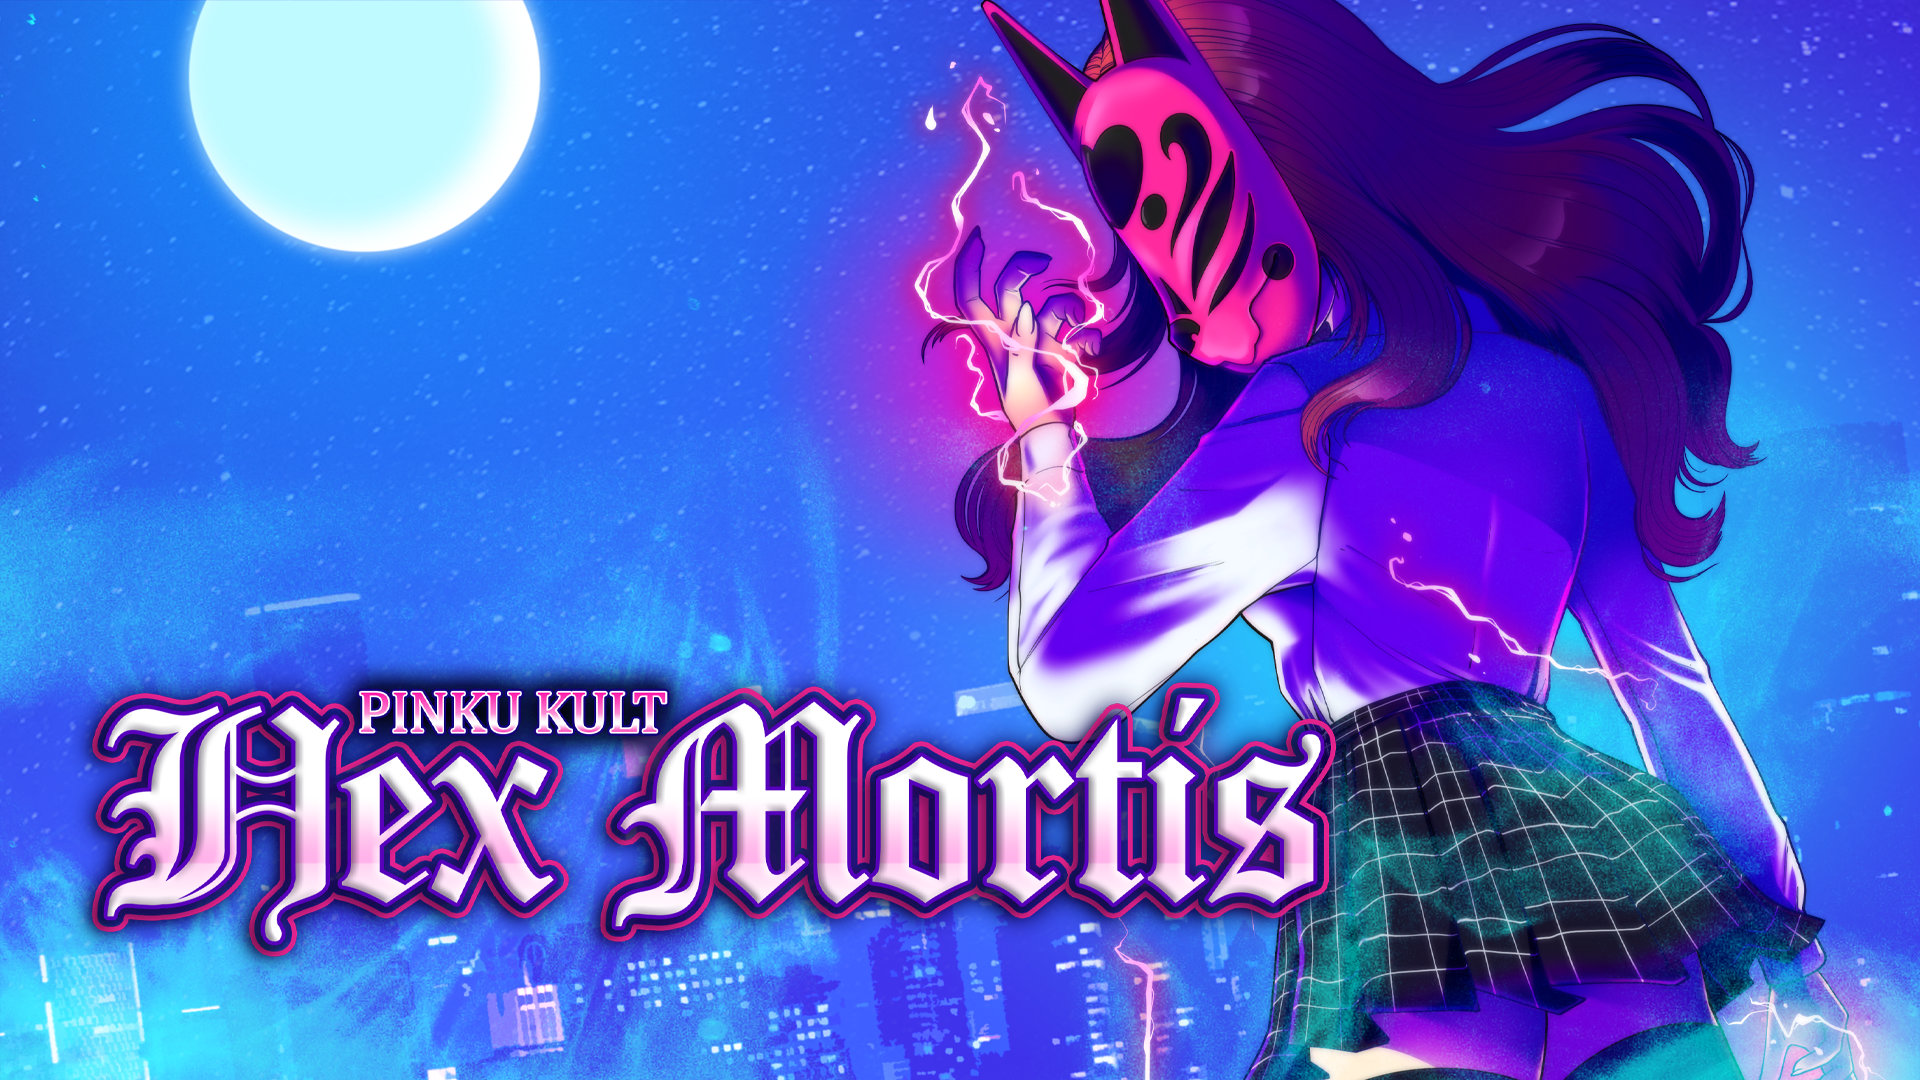 Pinku Kult Hex Mortis Artwork 001